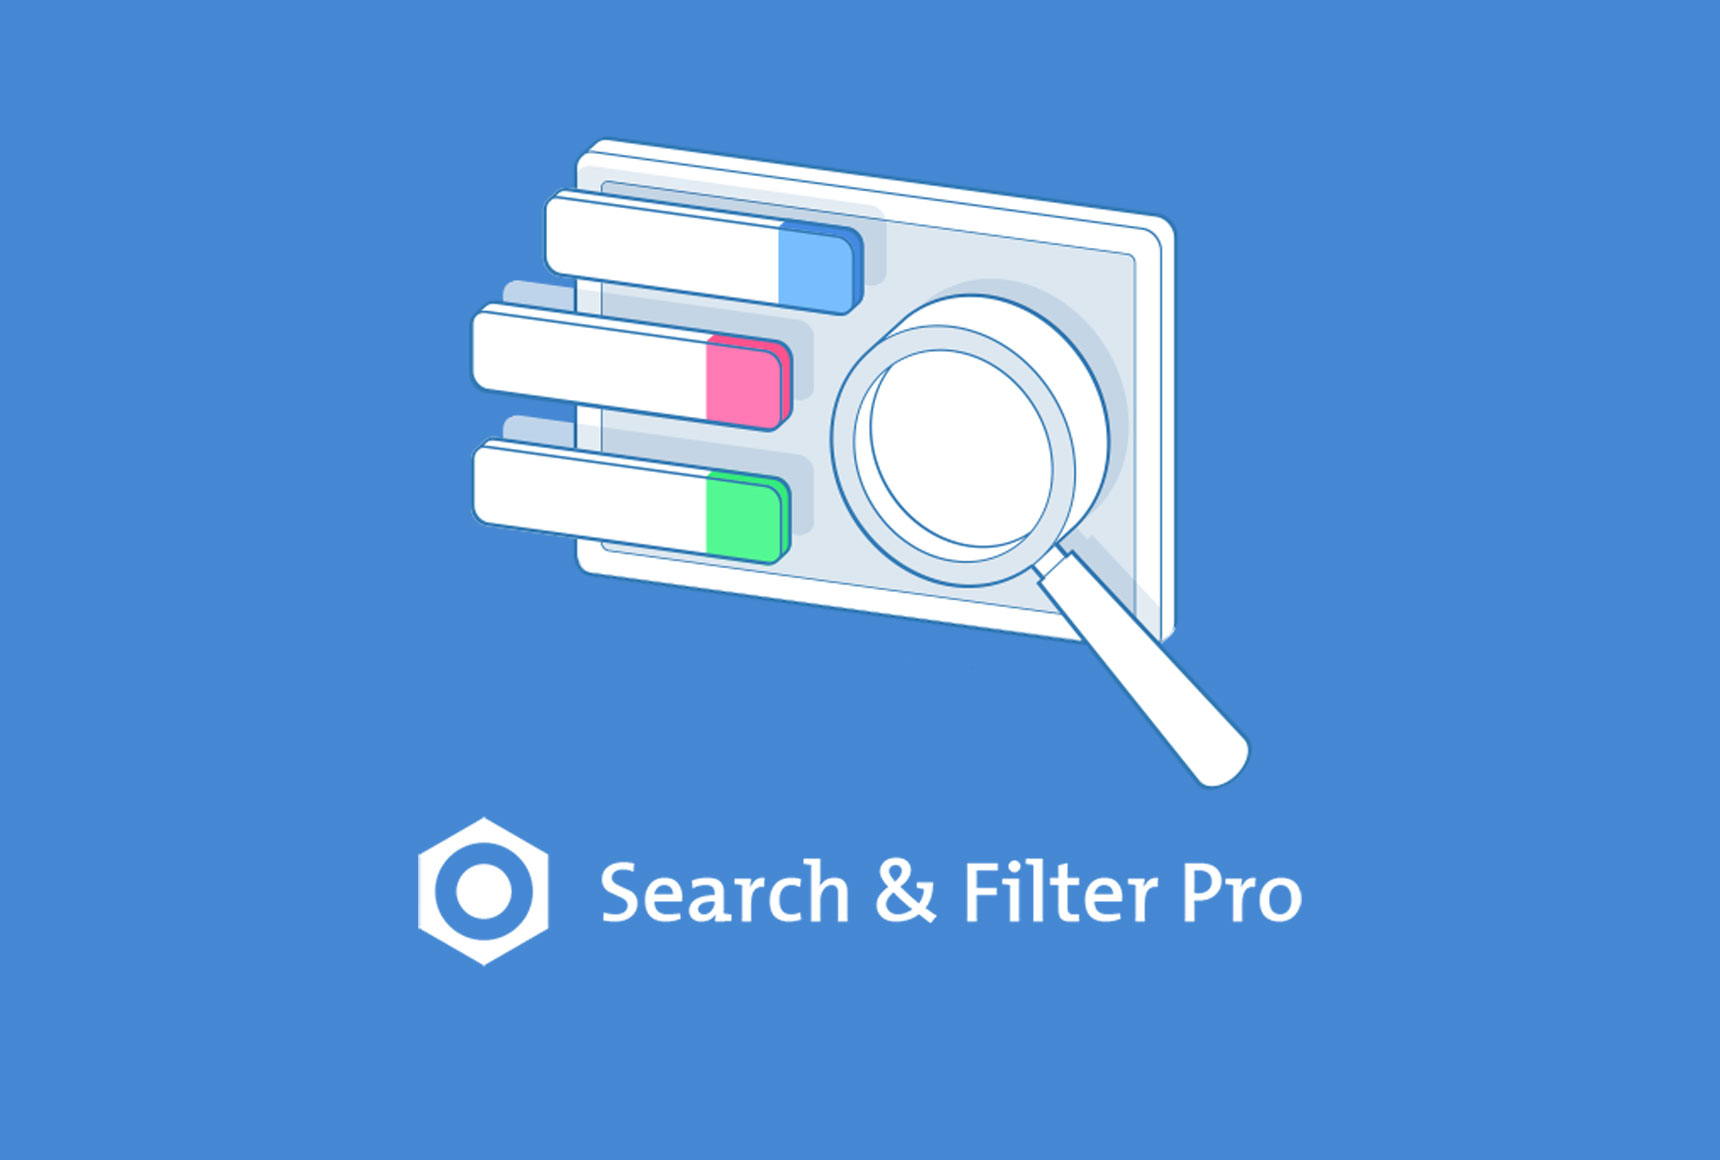 Search & Filter Pro masthead image